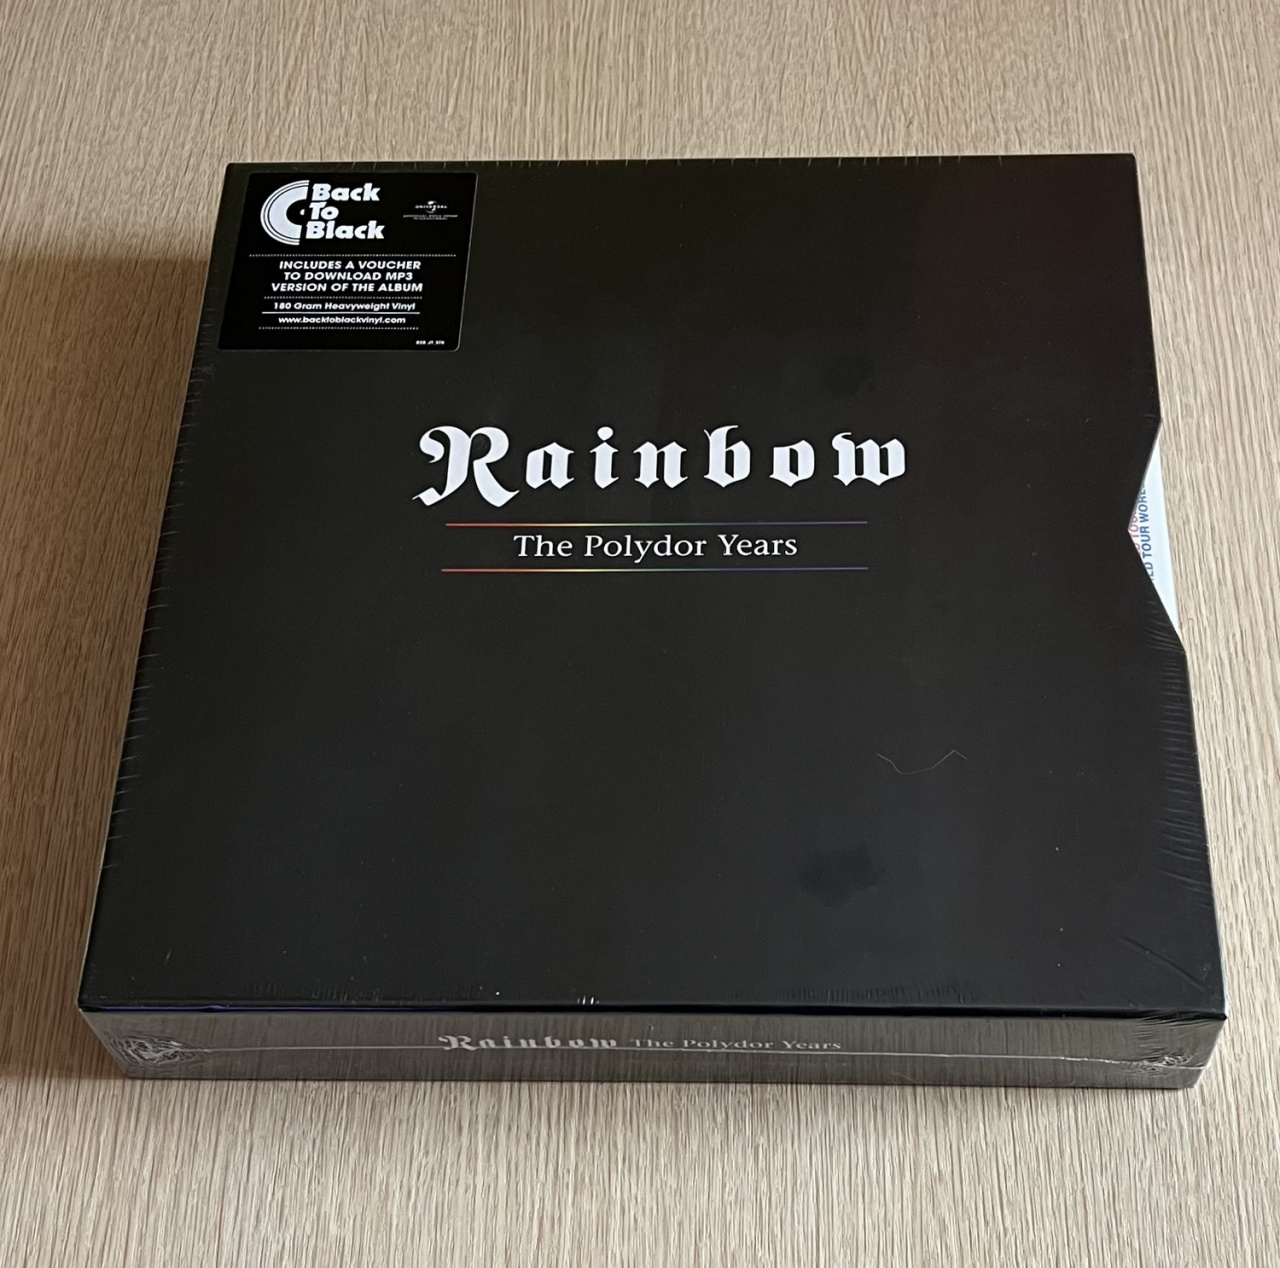 Rainbow - The Polydor Years 9LP Box set